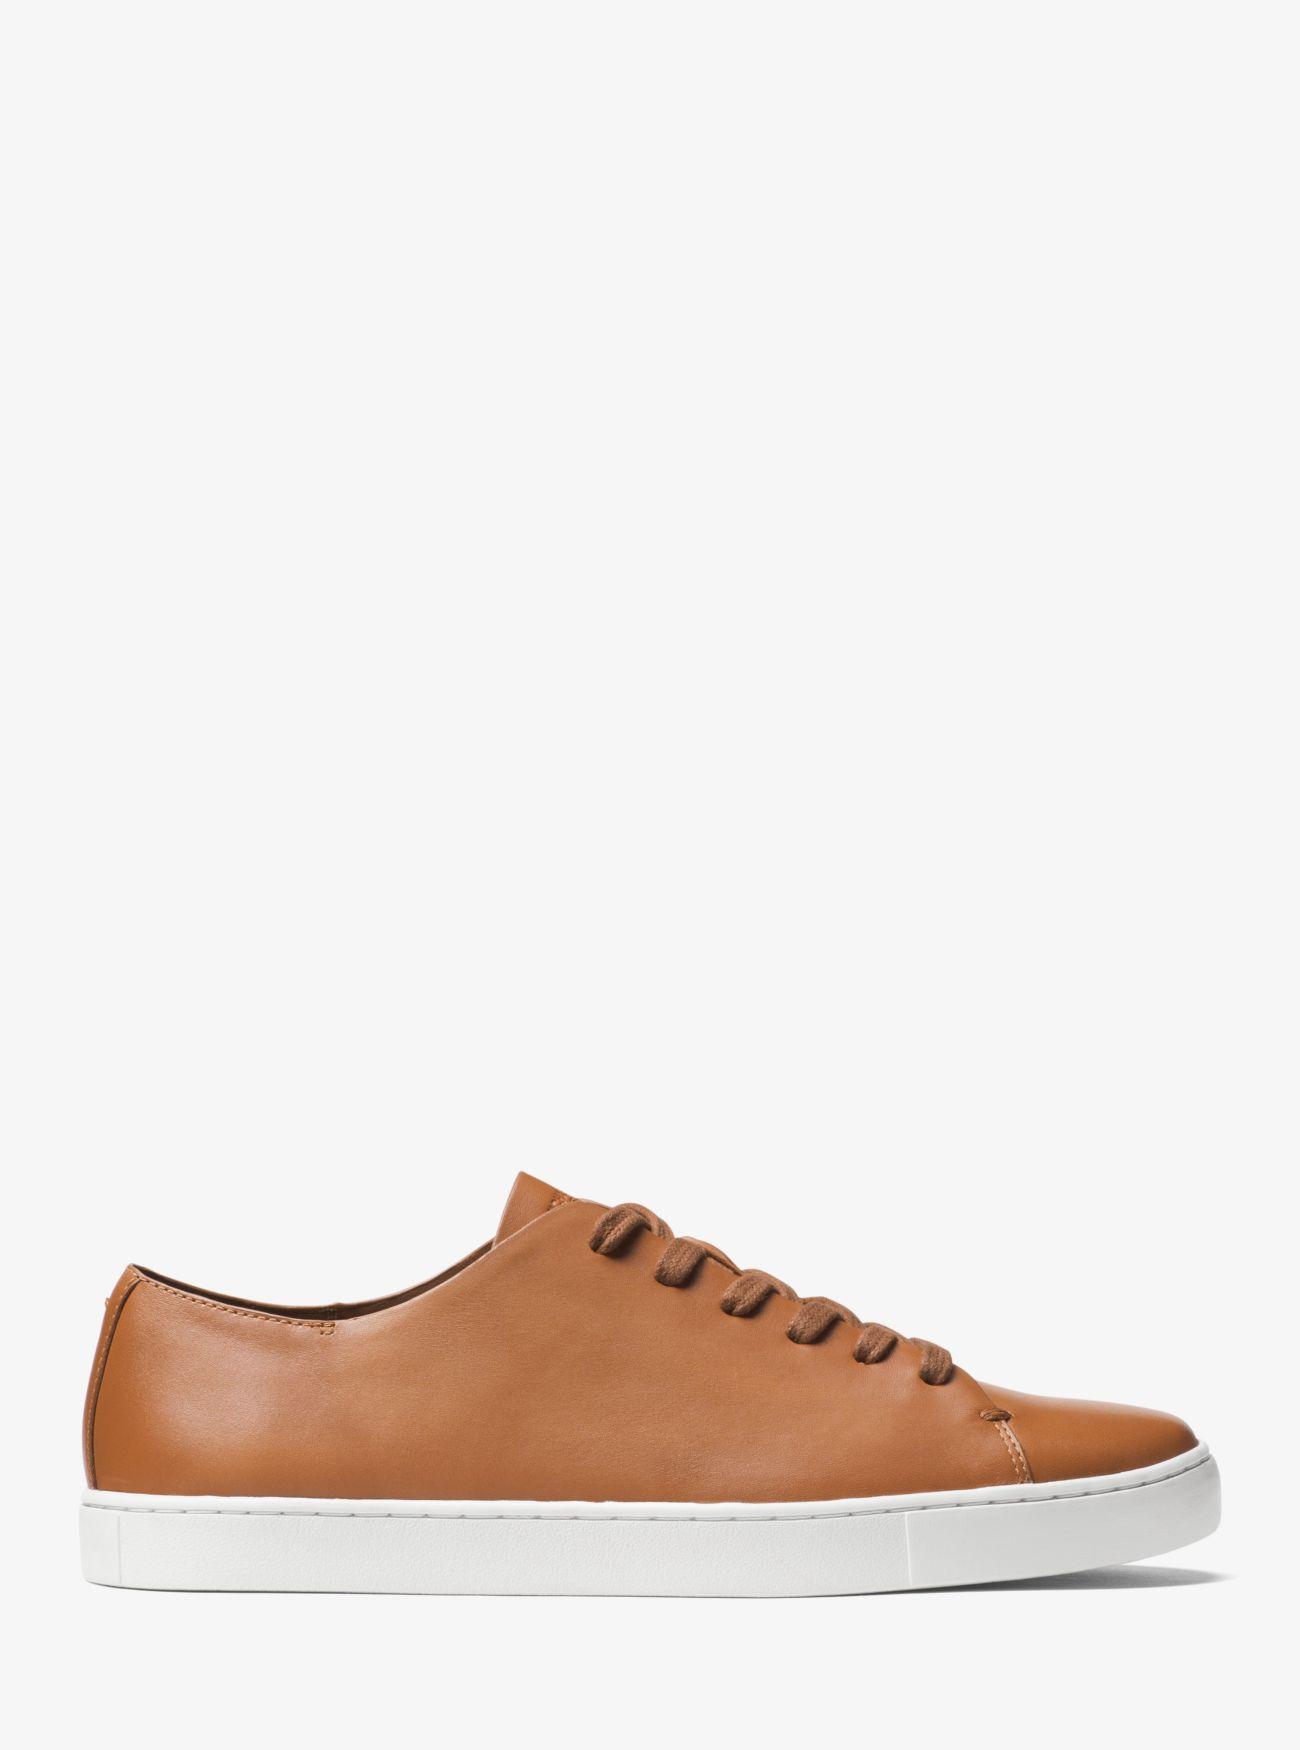 Michael Kors Jared Leather Sneaker in Brown | Lyst